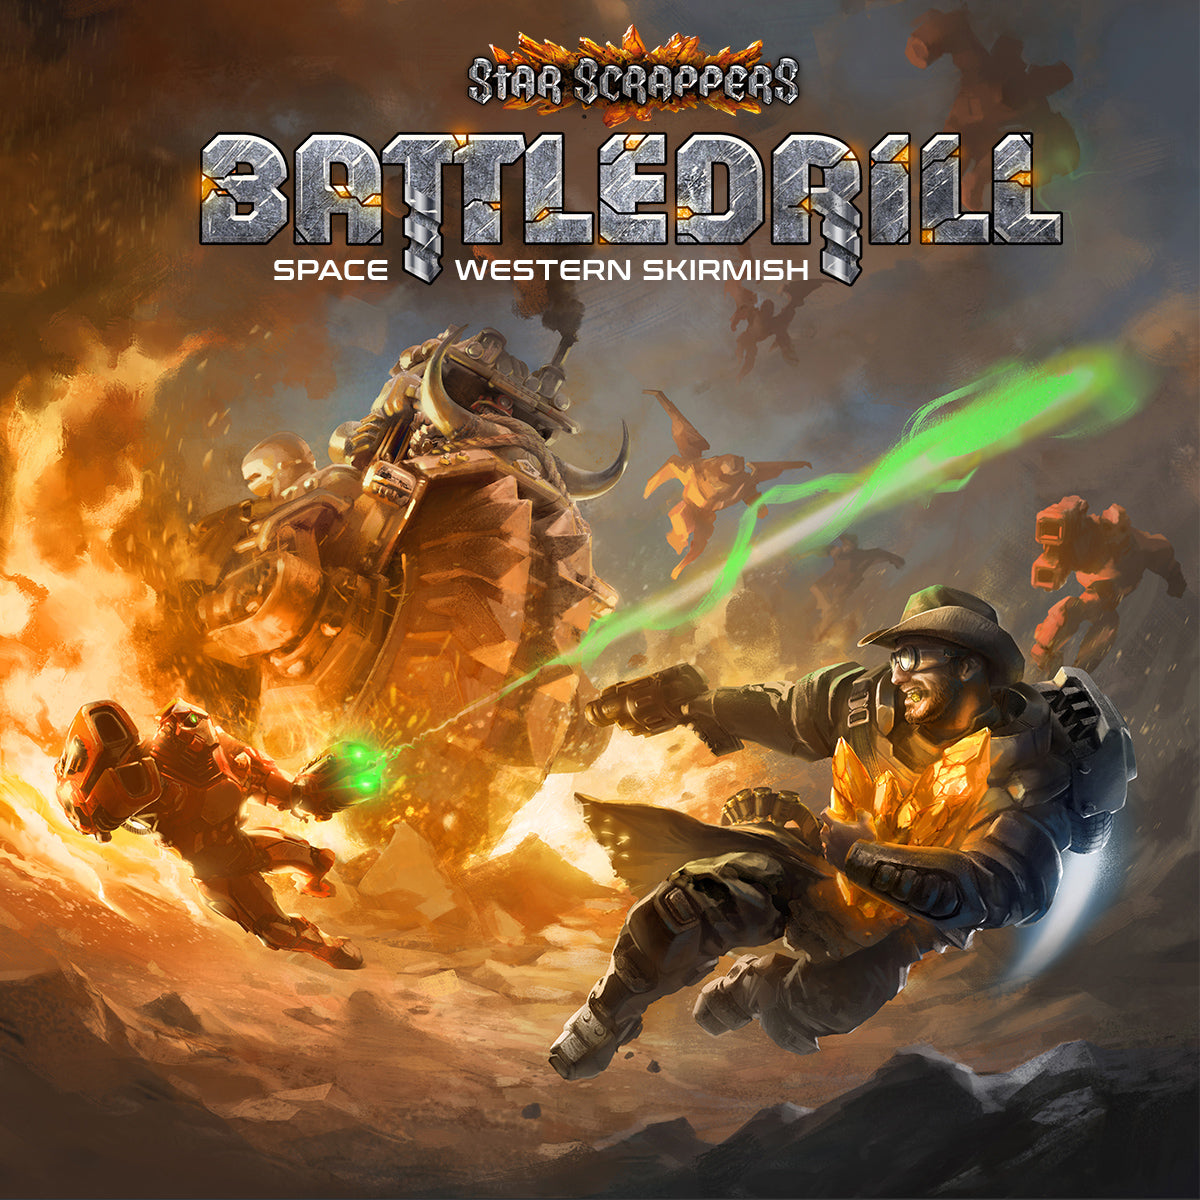 Xan the Outsider Minegglers Fraktion Battledrill Kickstarter Brettspiele, Rollenspiel Maler